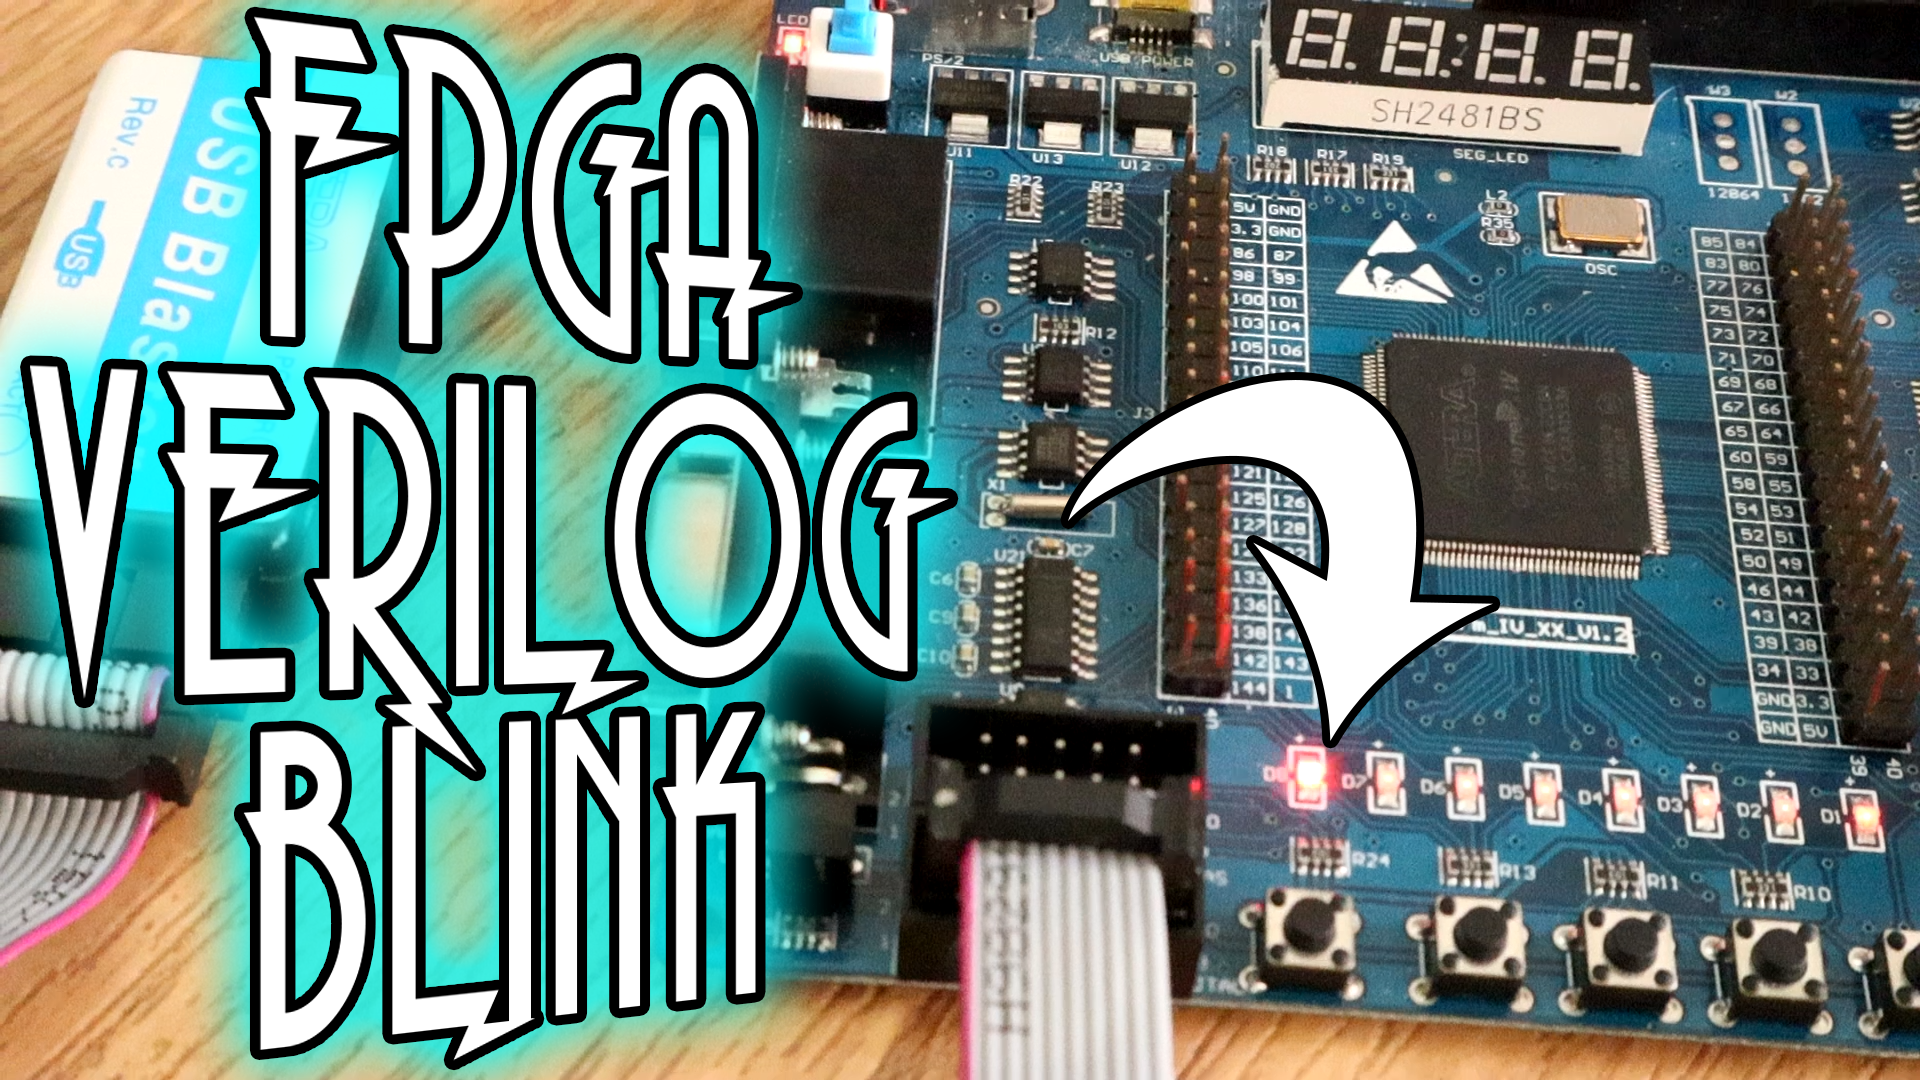 FPGA tutorial blink example